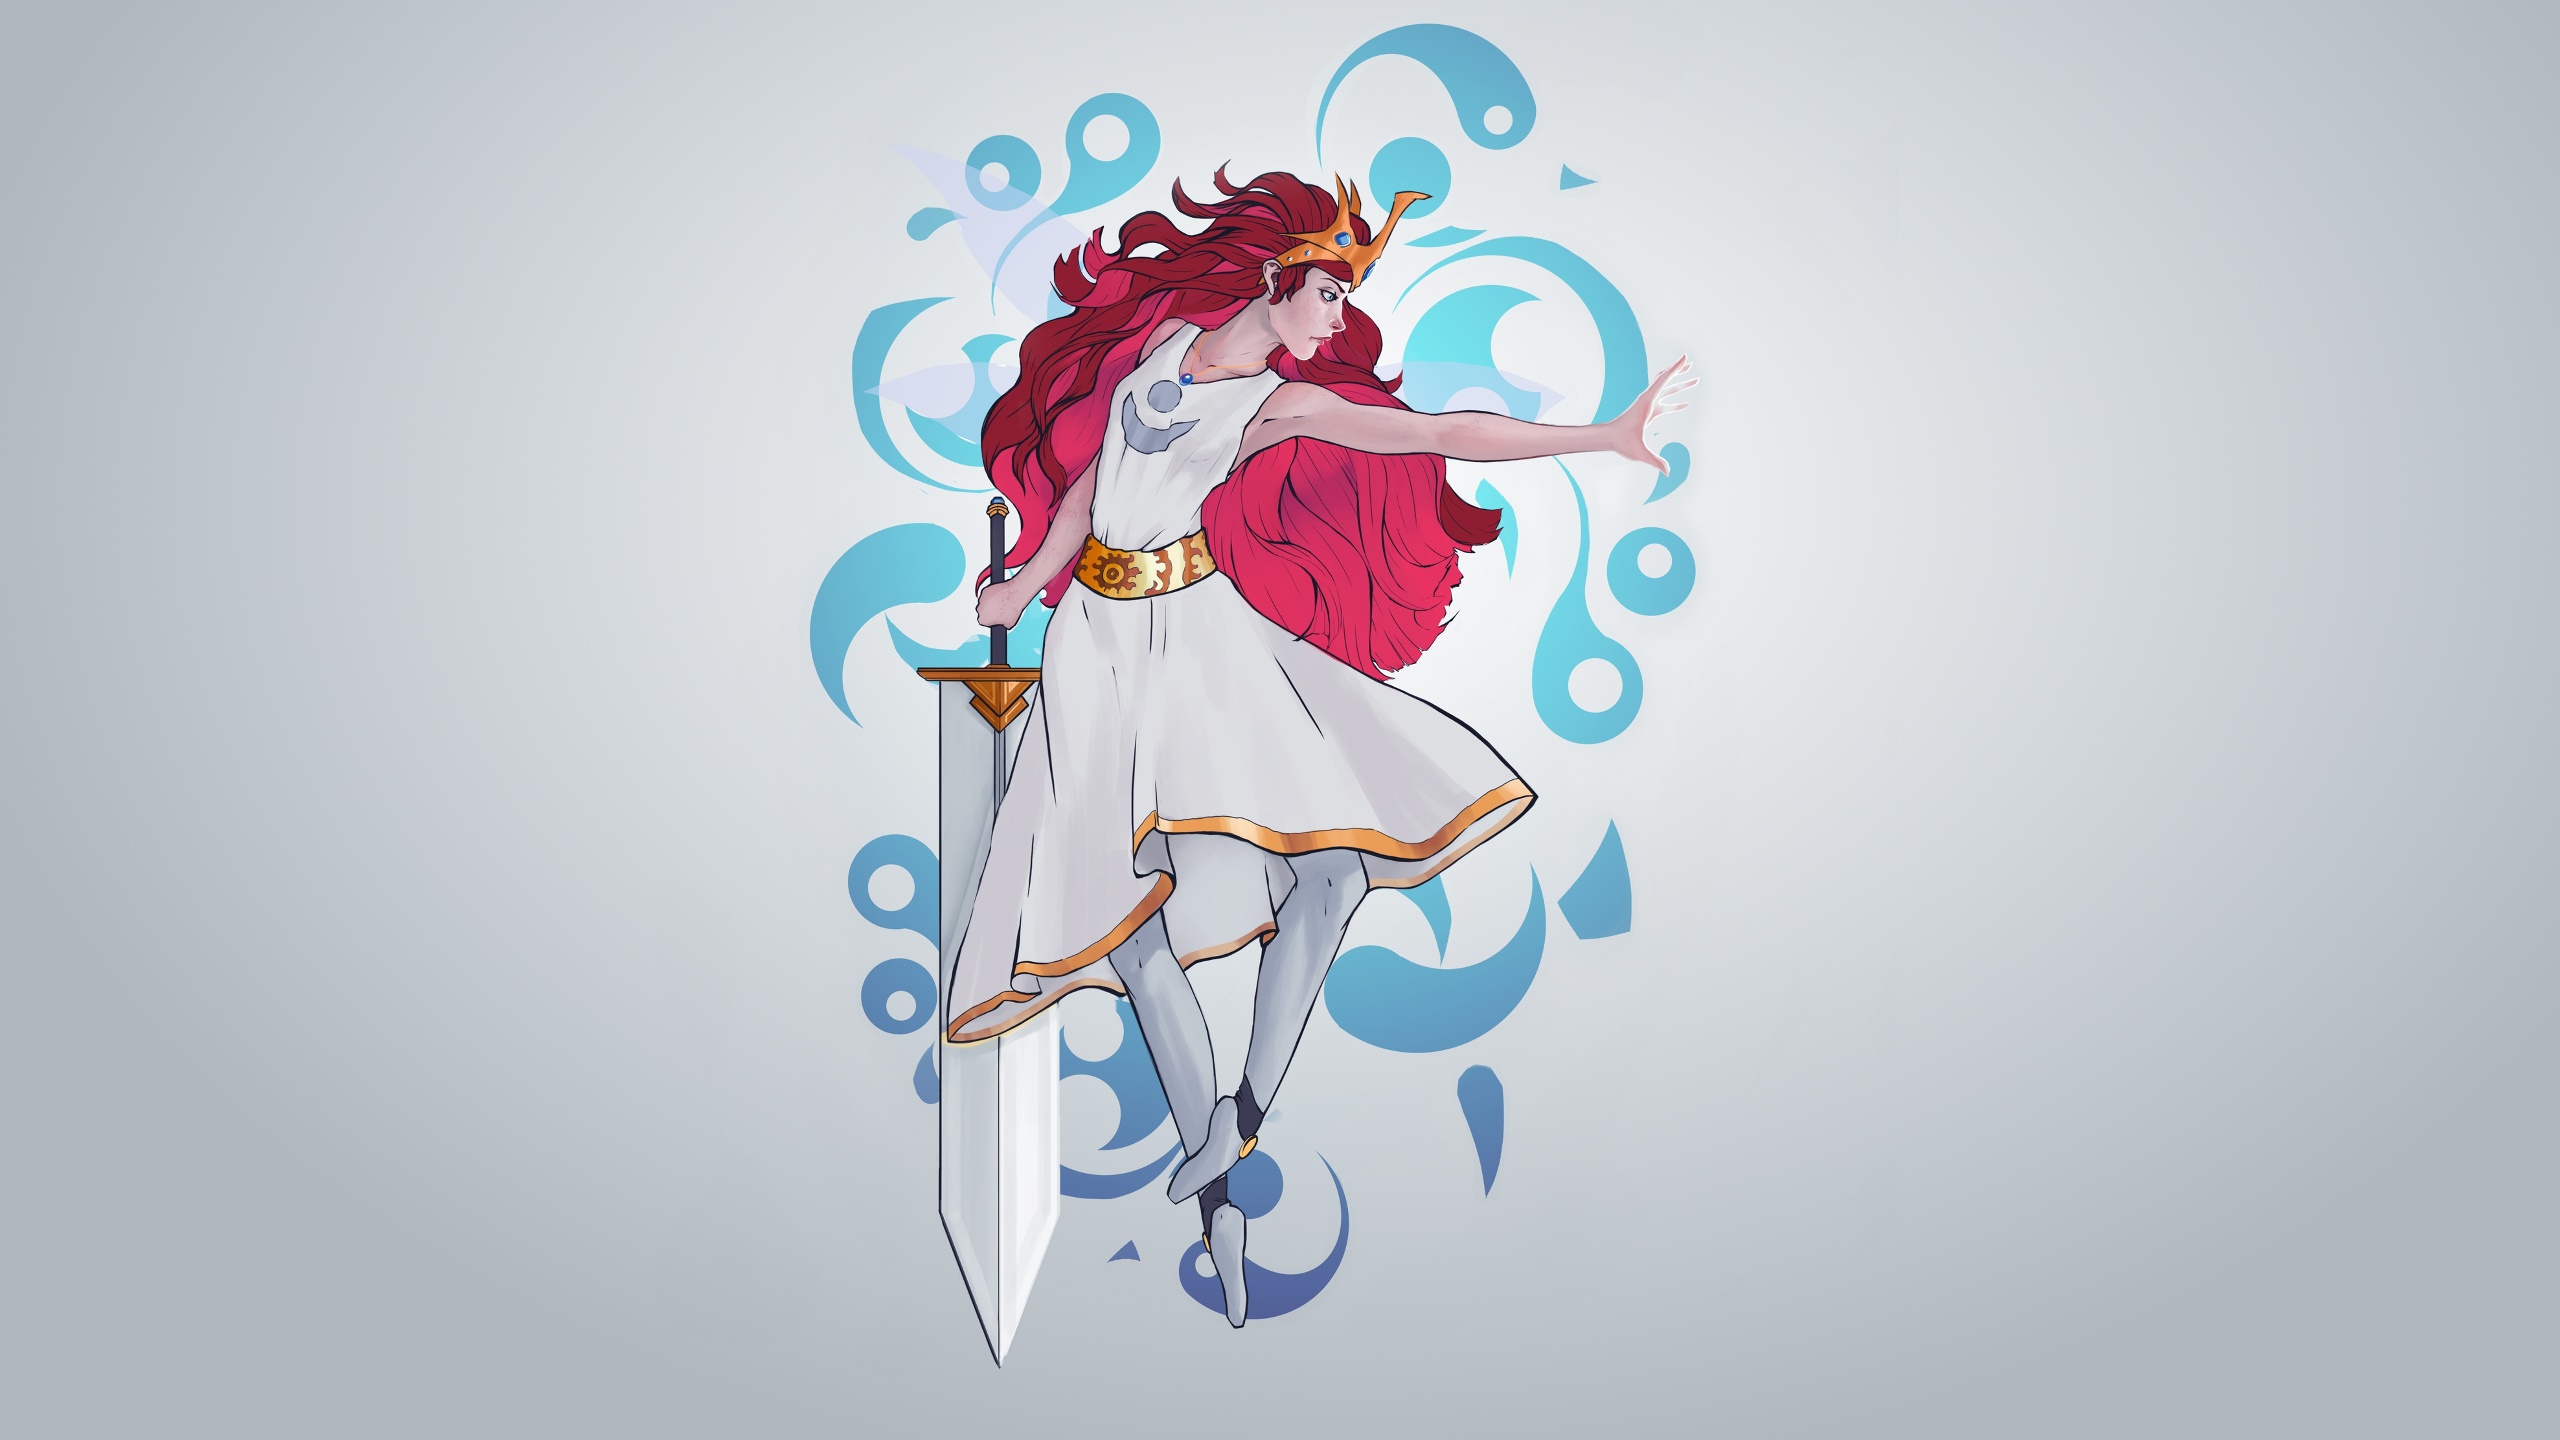 General 2560x1440 sword redhead fantasy art fantasy girl simple background